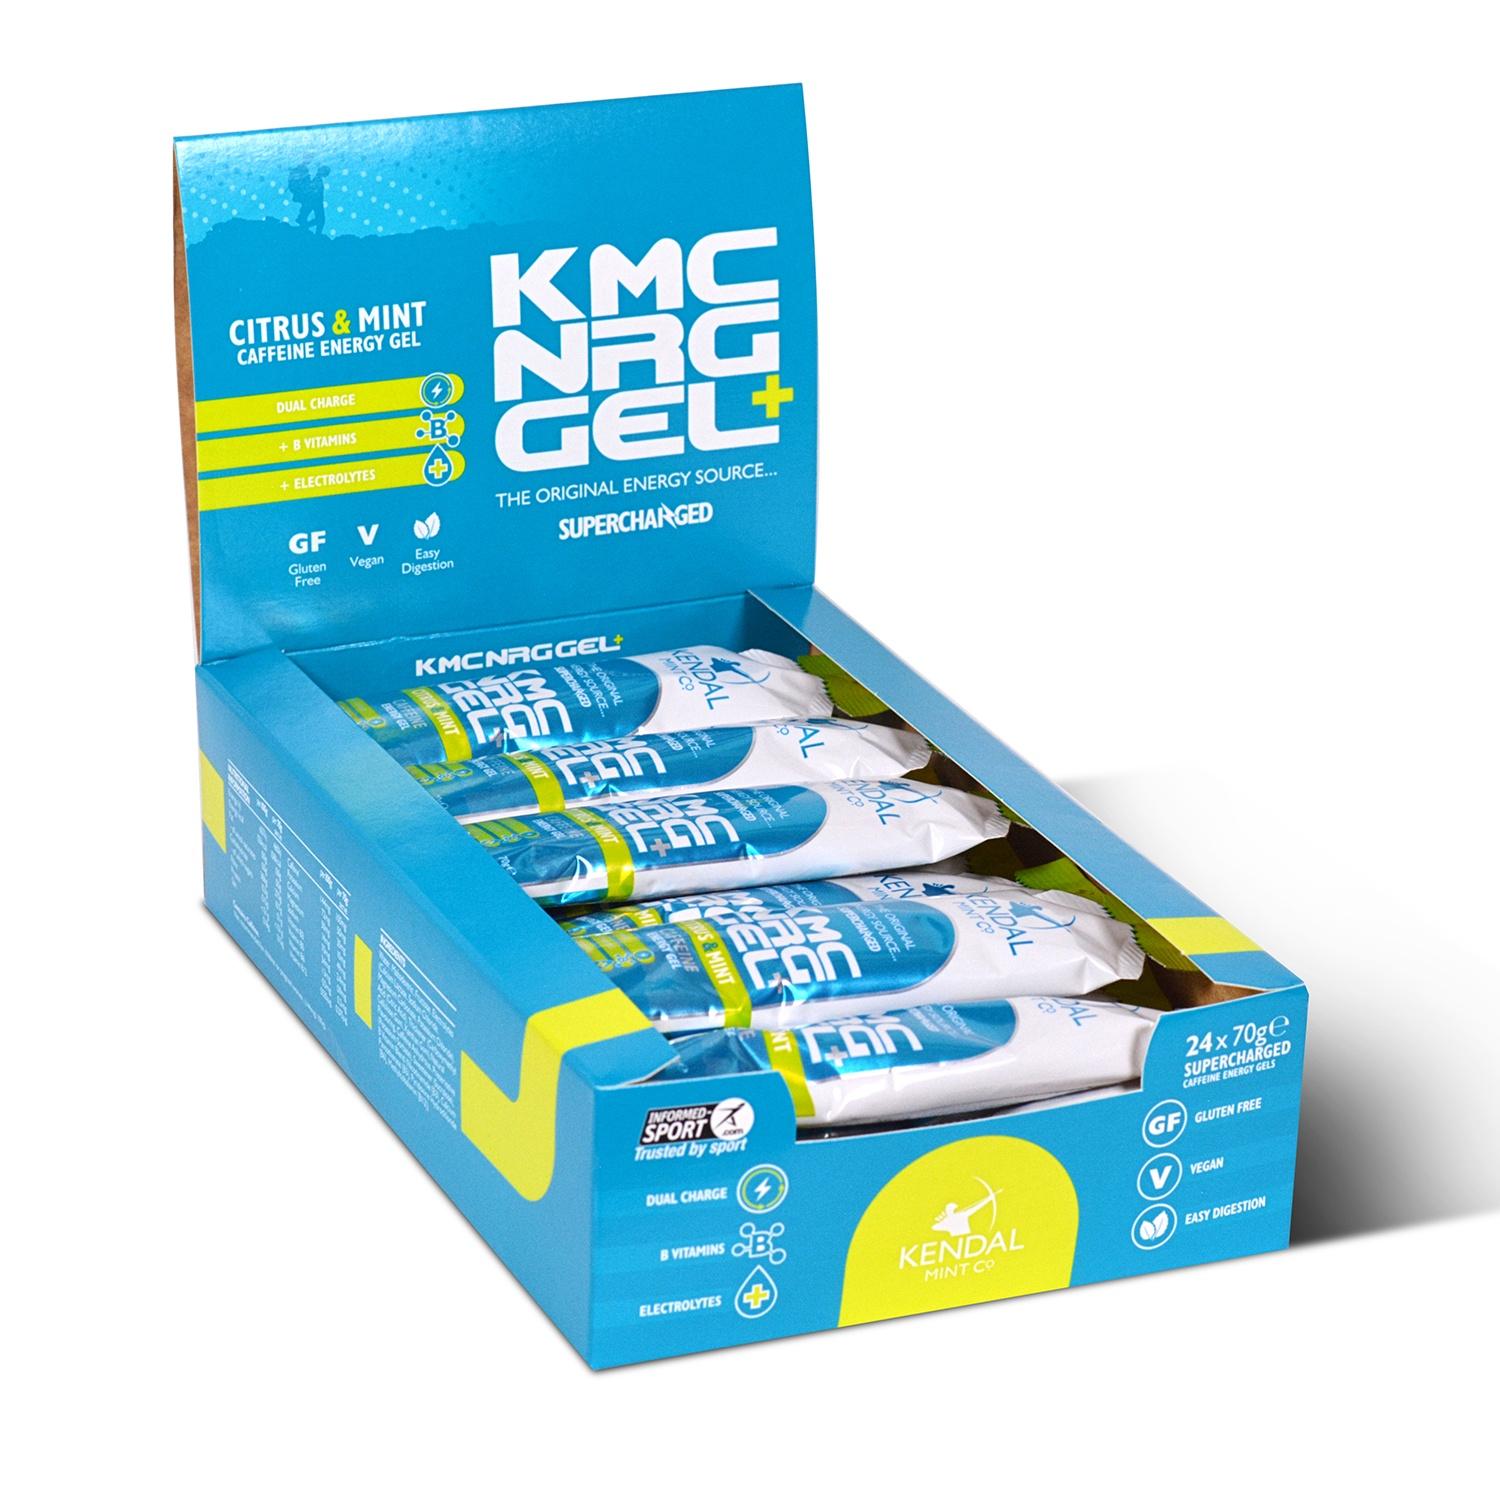 KMC NRG GEL+ Citrus & Mint Caffeine Energy Gel 70g - KMC NRG GEL - Kendal Mint Co® - 24 x 70g (Save)